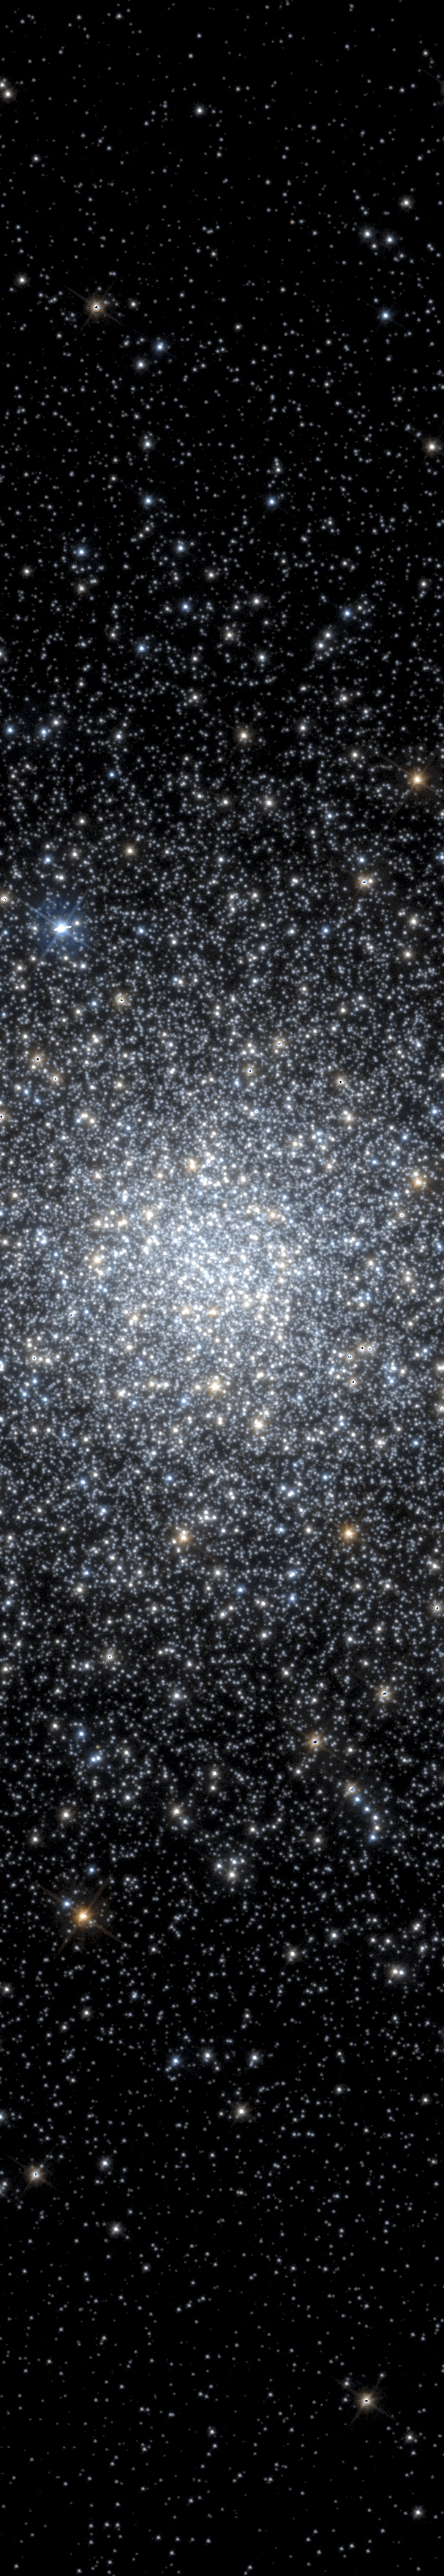 Image credit: NASA / ESA / Hubble Legacy Archive (STScI).